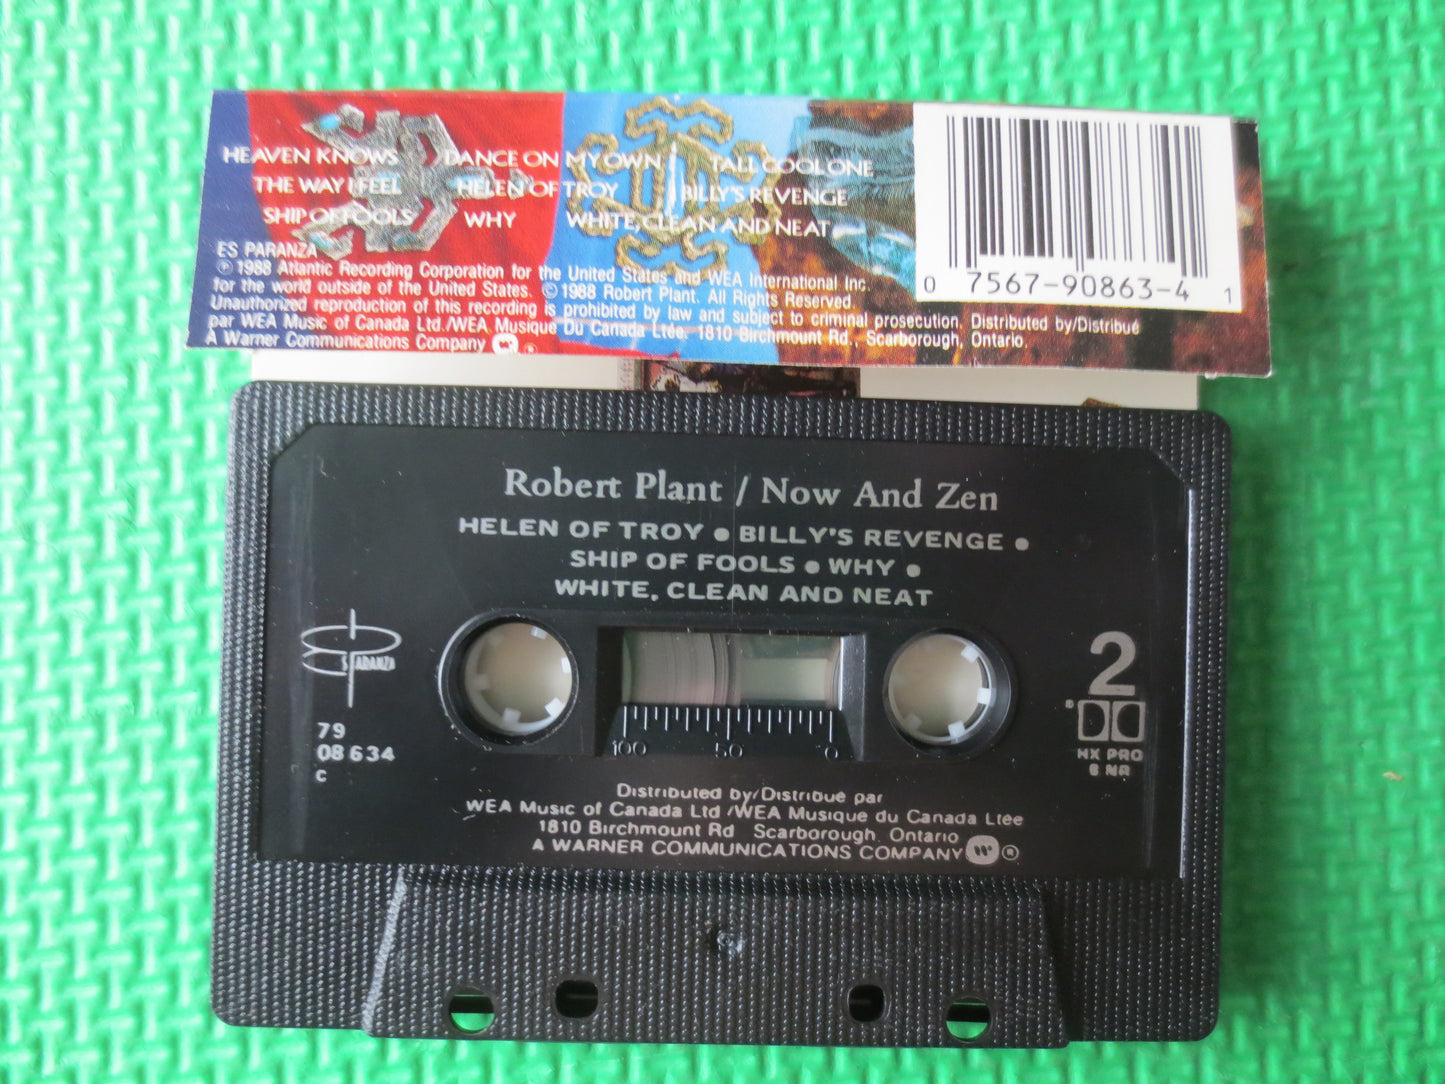 ROBERT PLANT, Now and ZEN, Robert Plant Tapes, Tape Cassette, Rock Music Tapes, Music Cassettes, Cassettes, 1988 Cassette